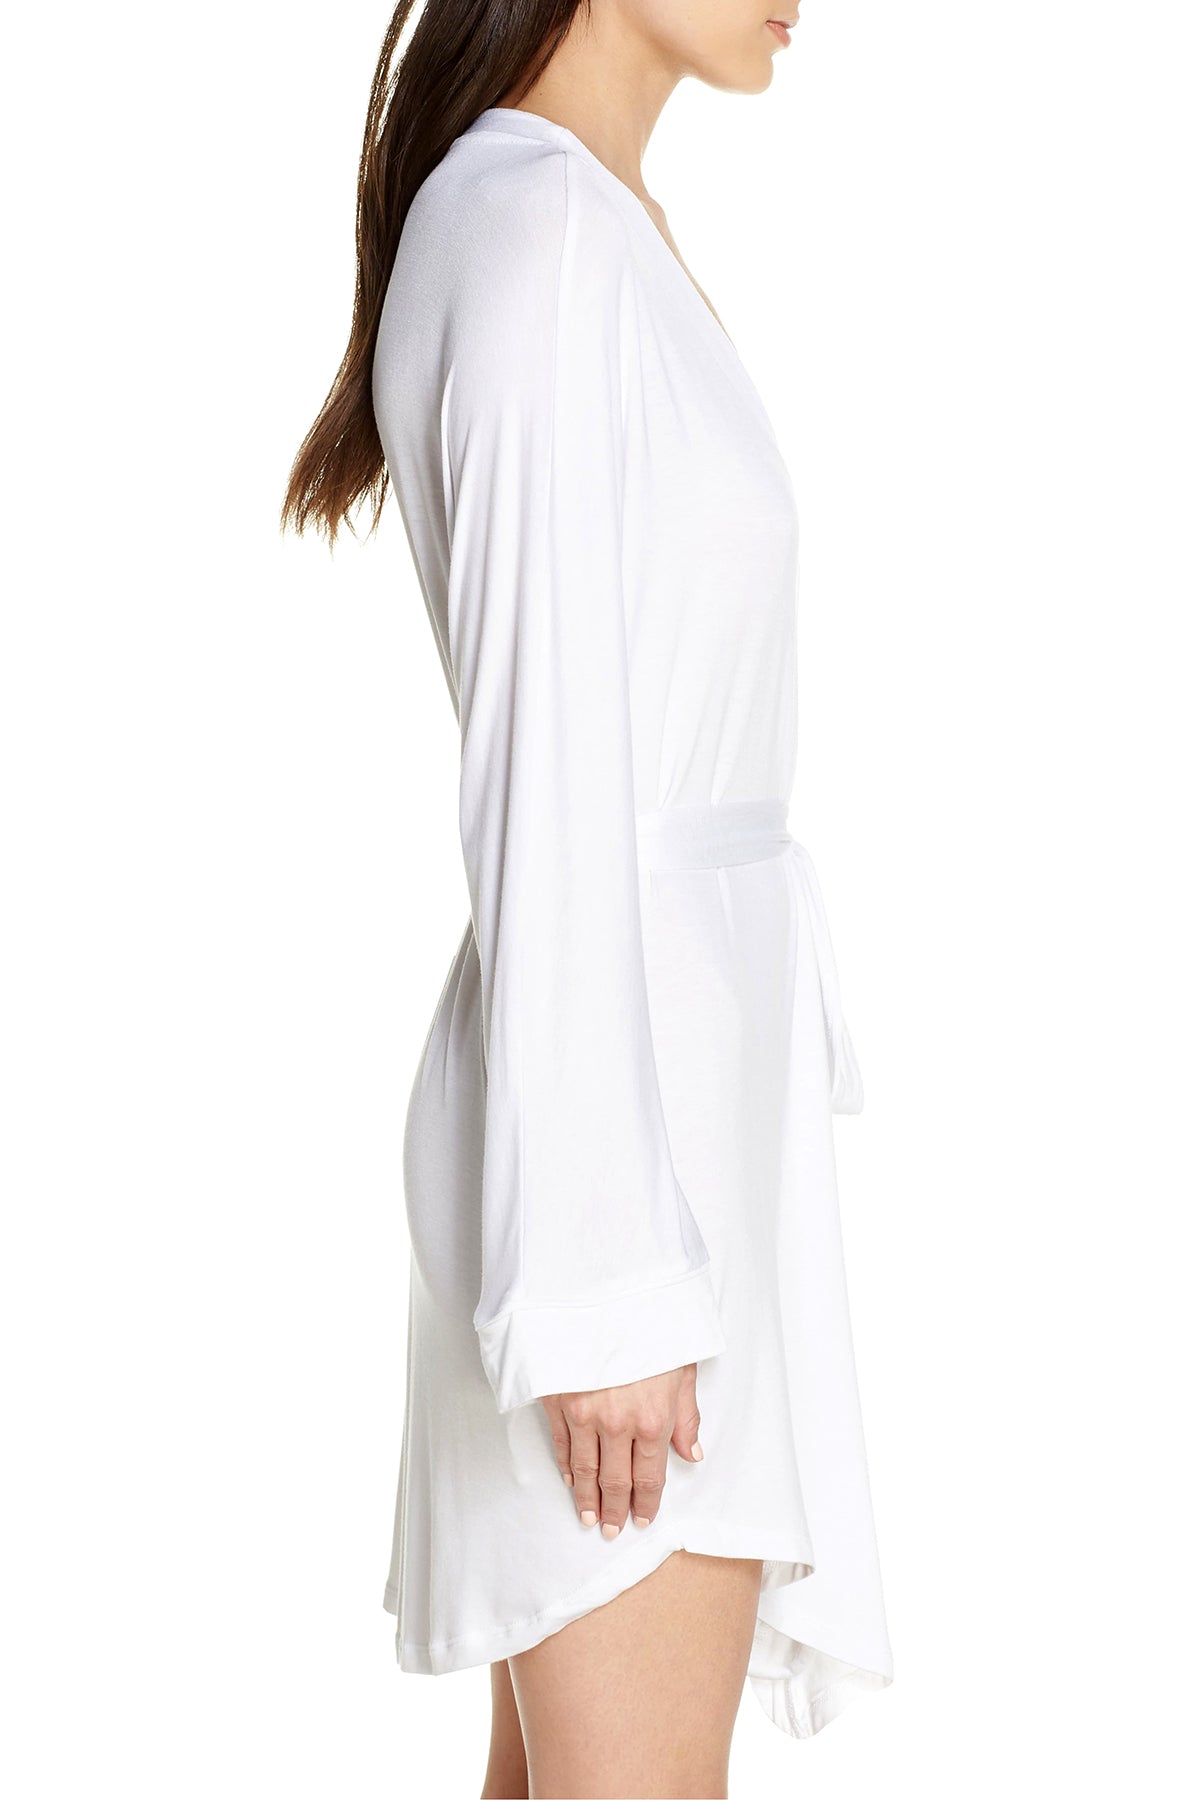 Honeydew Intimates White 'Wifey' Rayon Short Robe